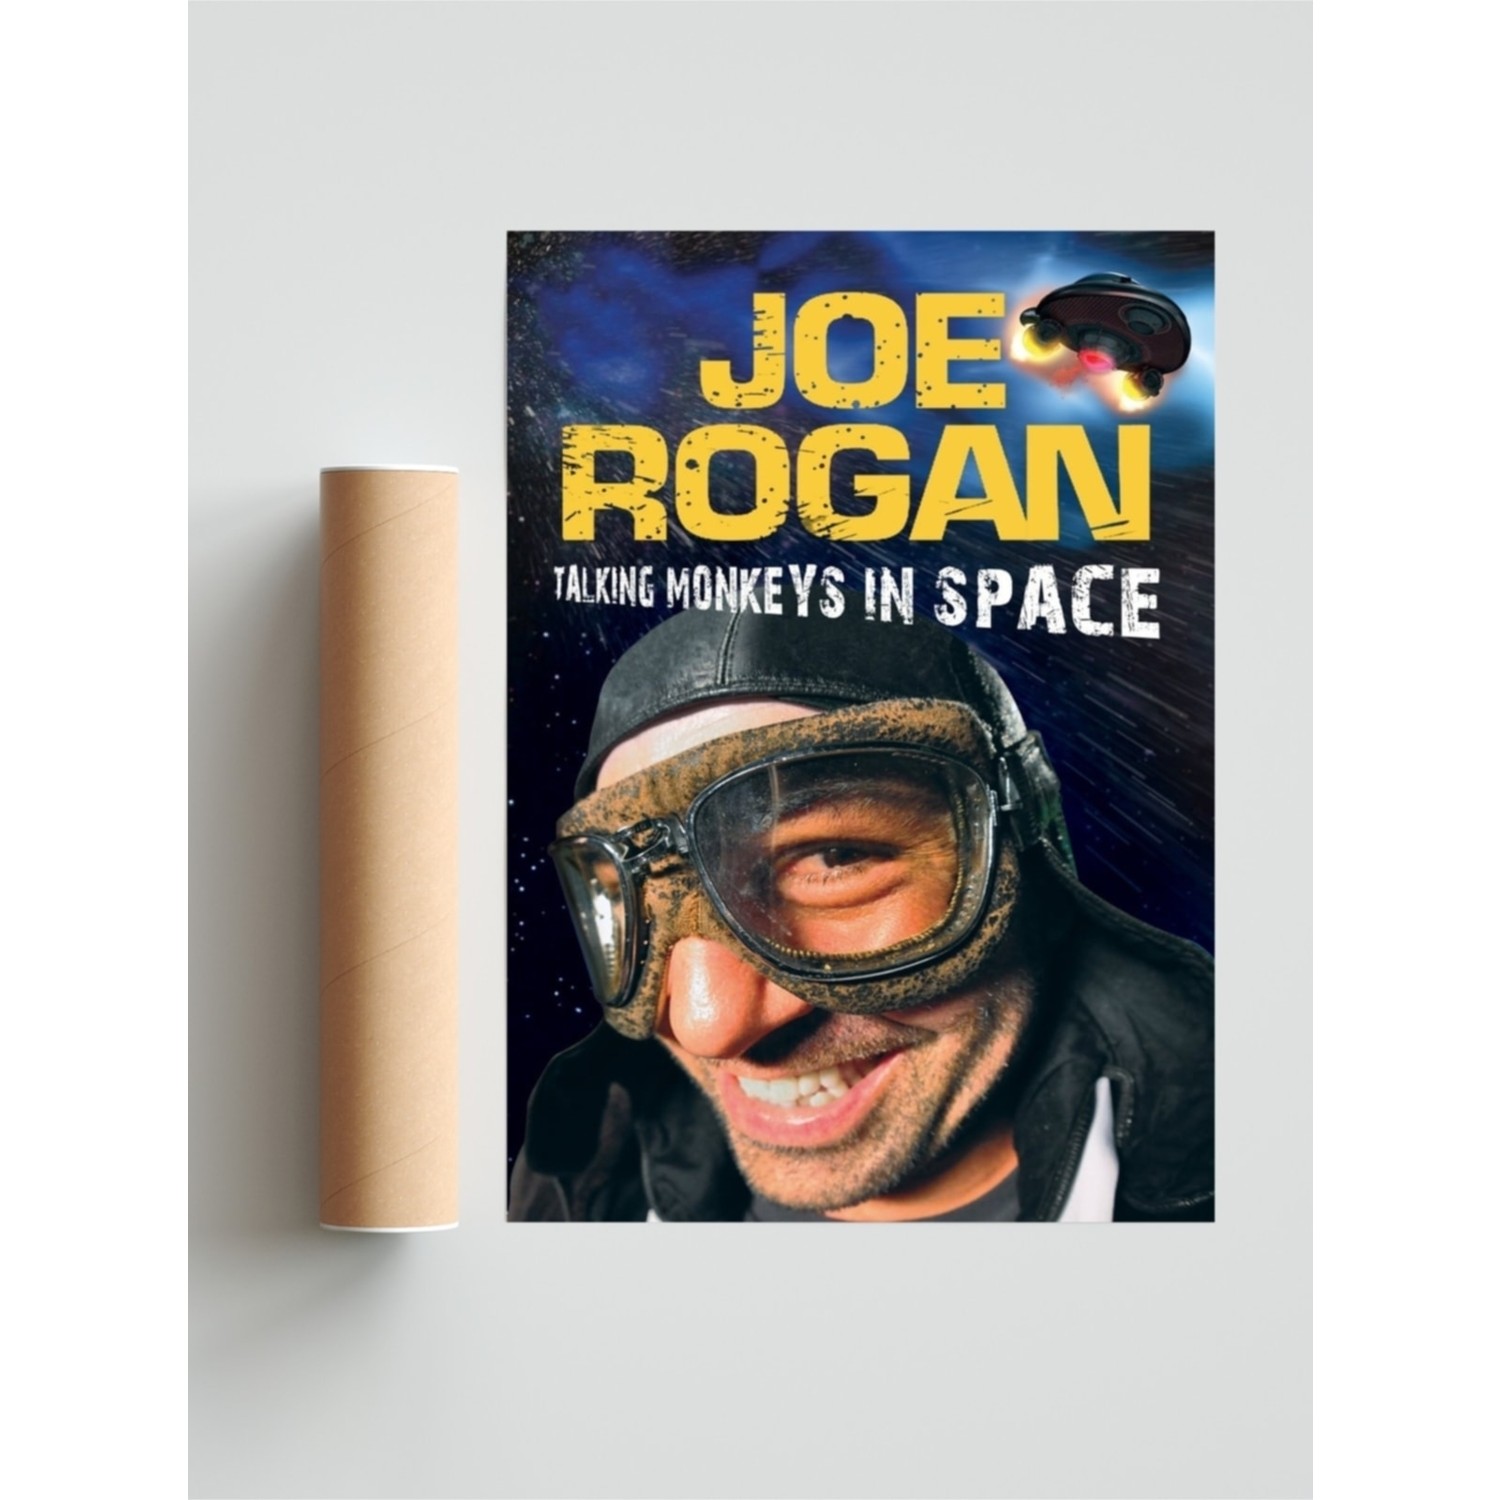 Joe rogan talking monkeys in space torrent download